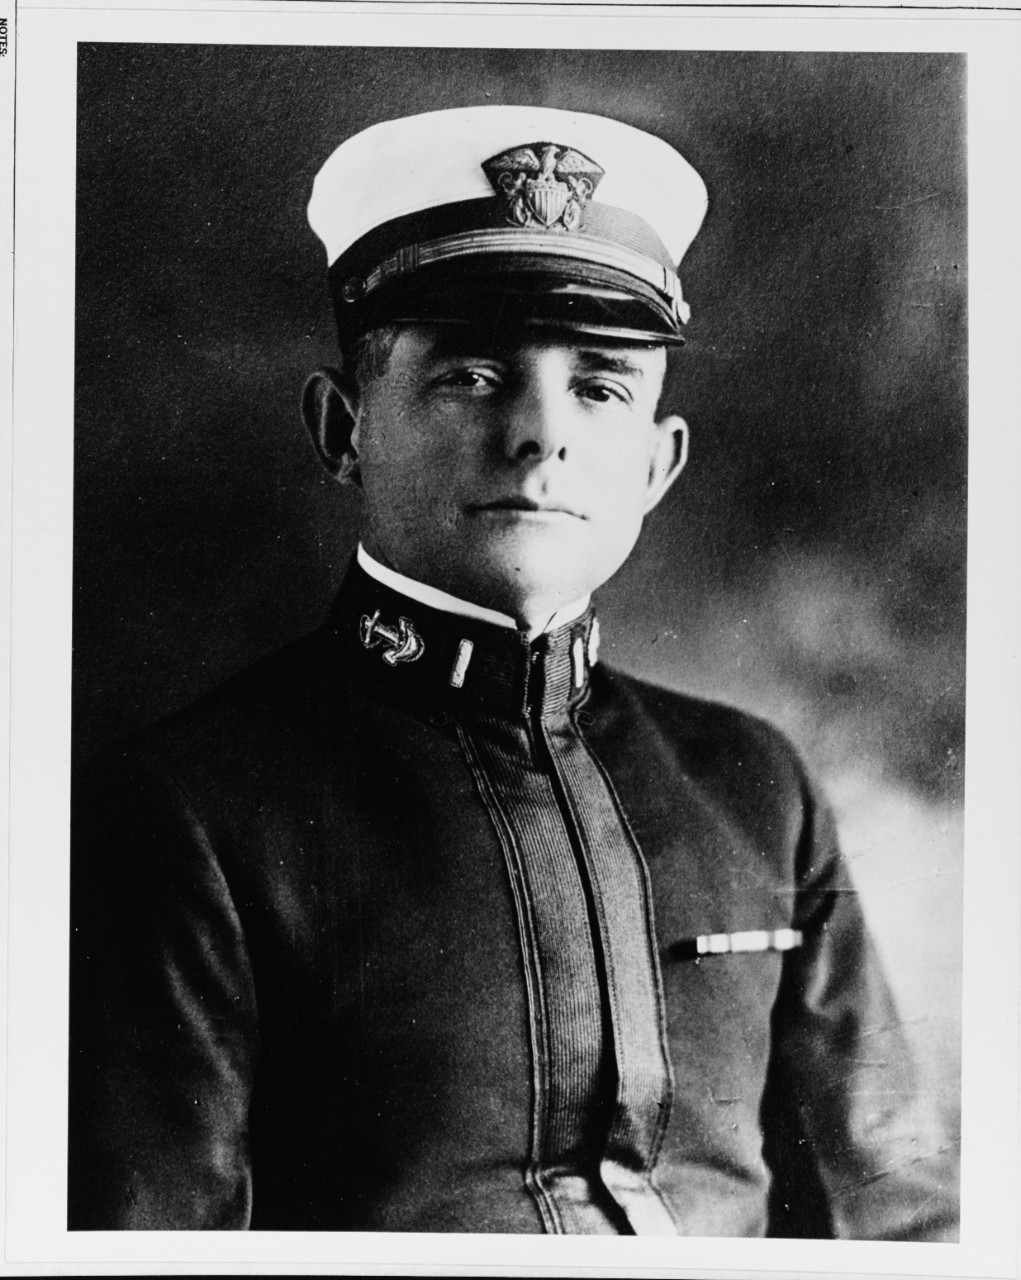 Lieutenant James A. Martin, USN